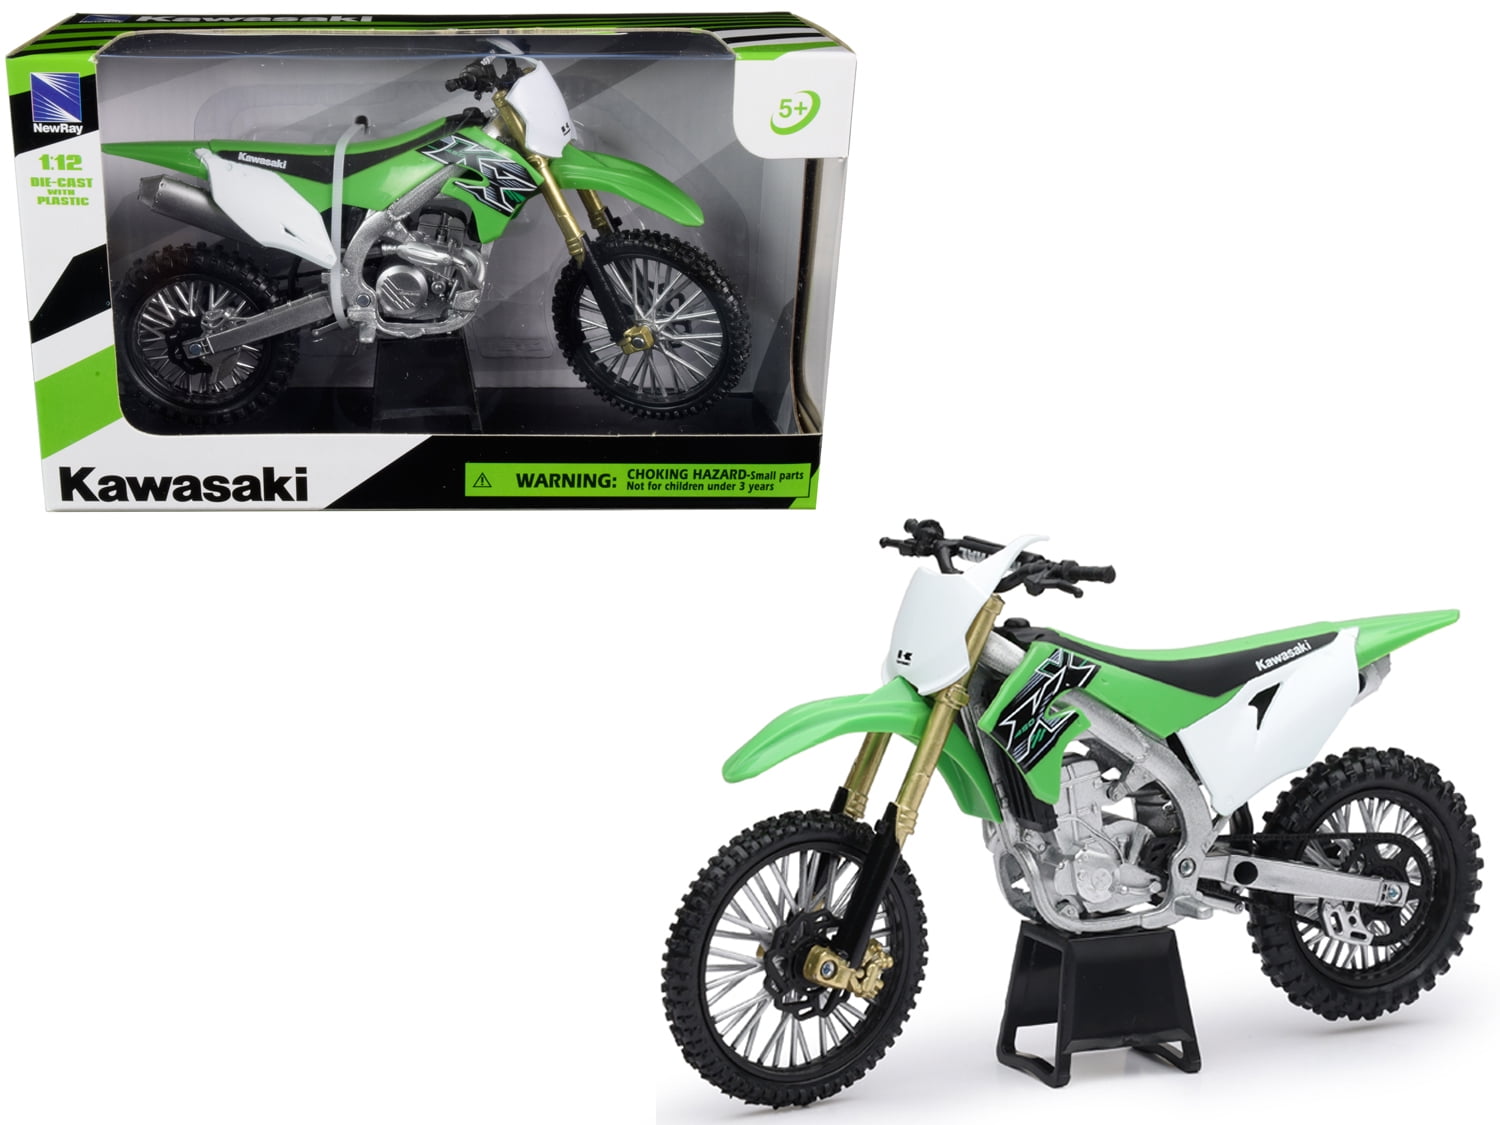 Kawasaki KXF 450 1:12 Die Cast Motocross Self Assembly Toy Model Motorbike Green 